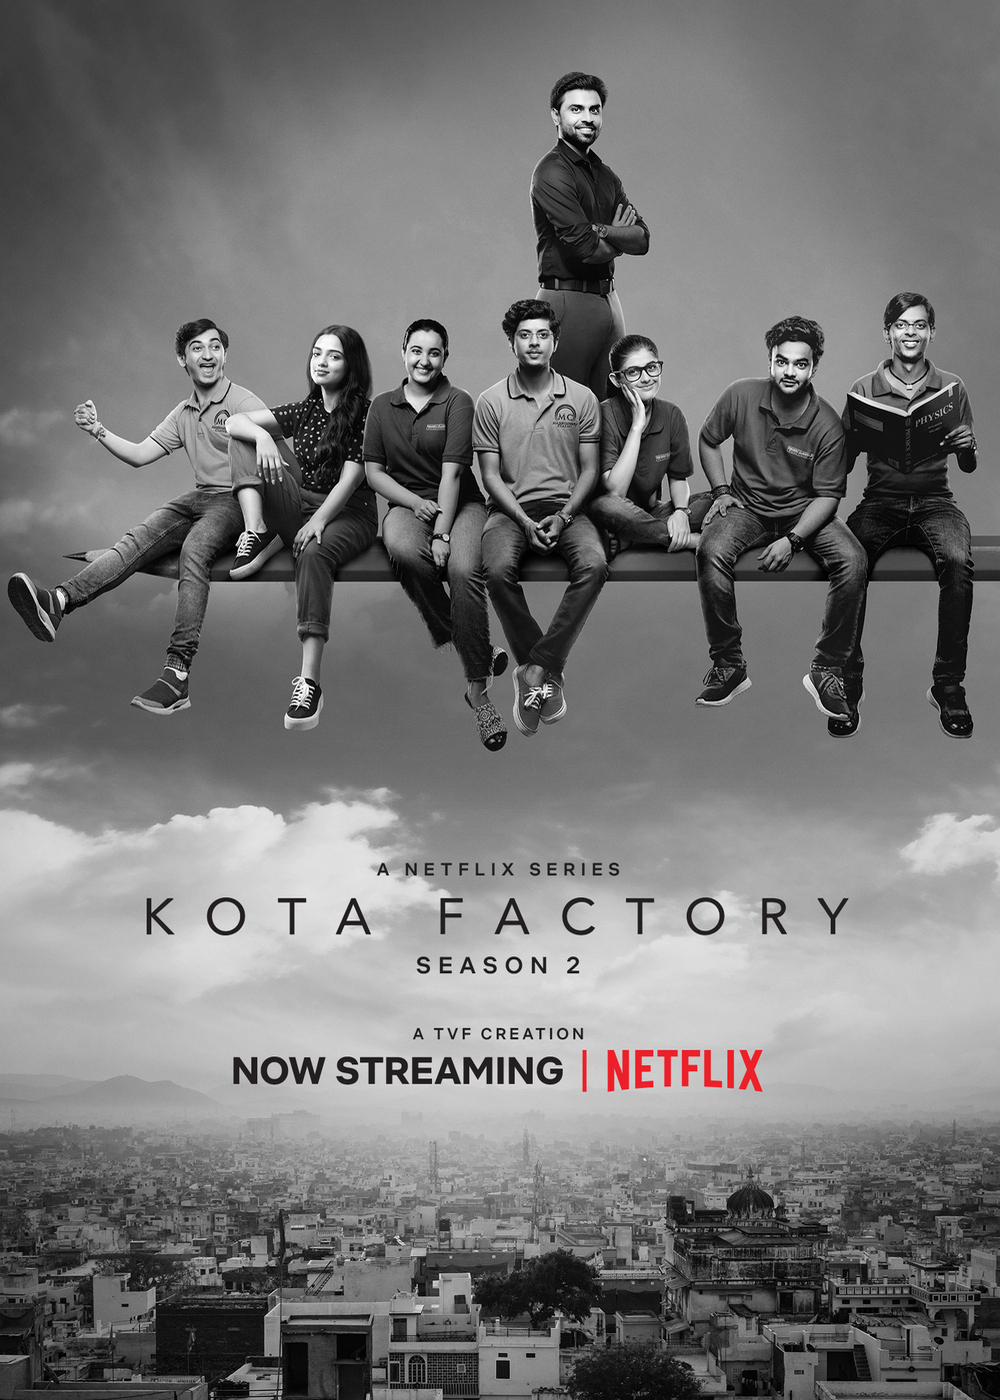 Kota Factory Cast, Trailer, Overview